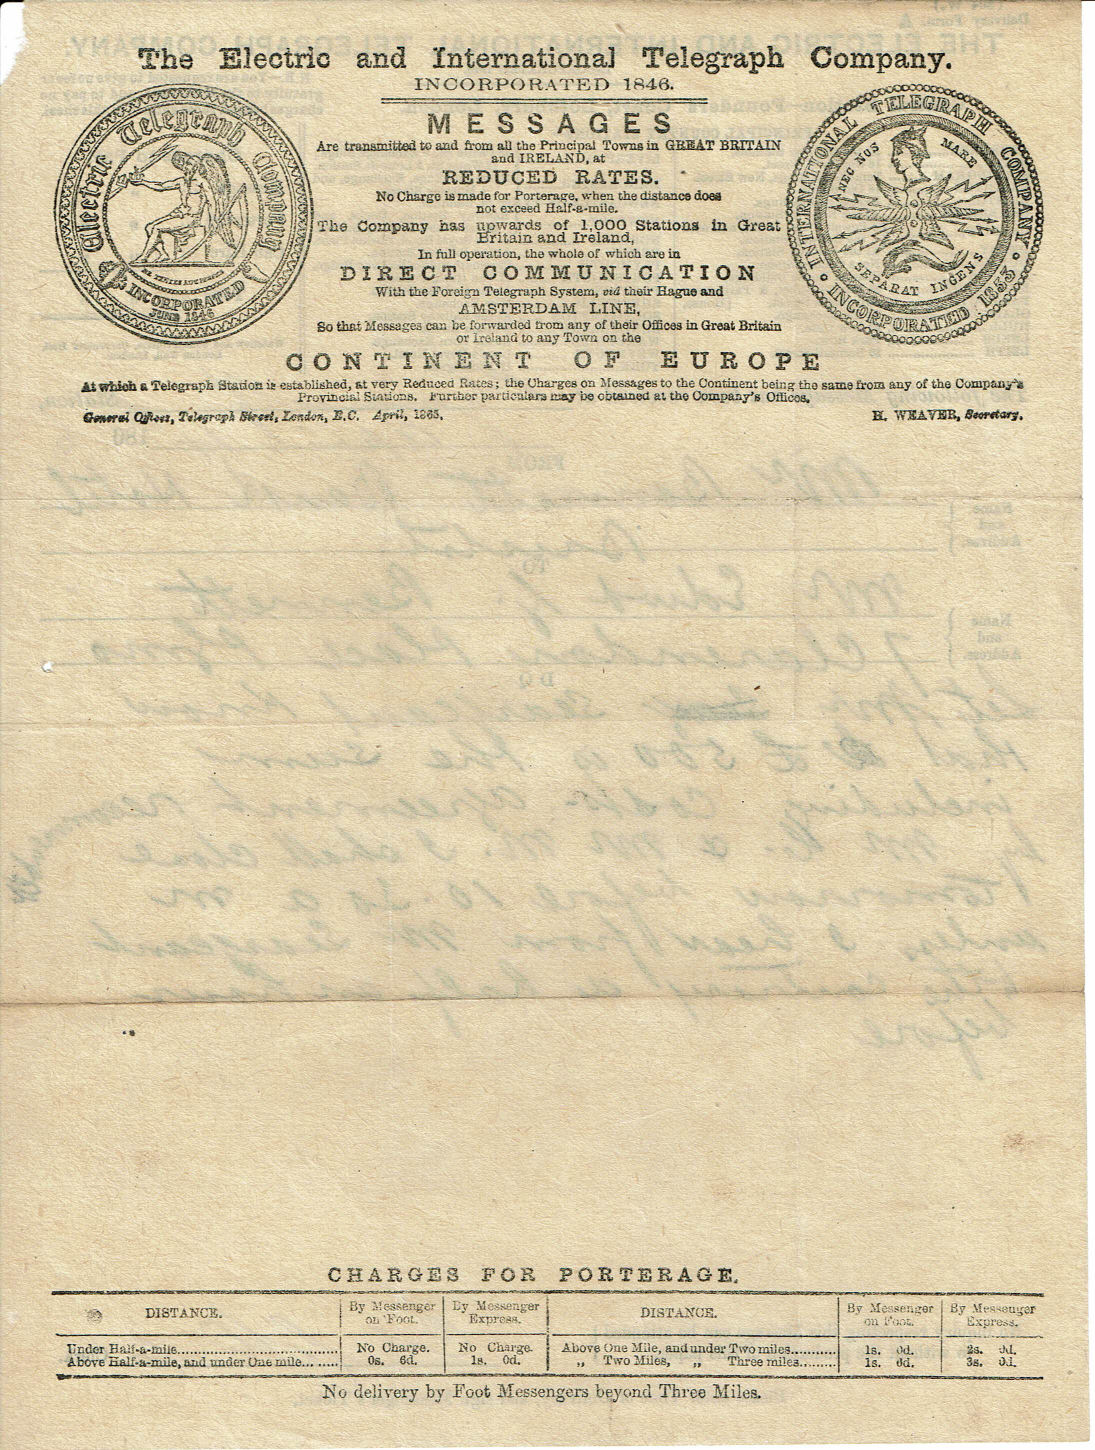 Electric Telegraph Company Form A - 1865 back.